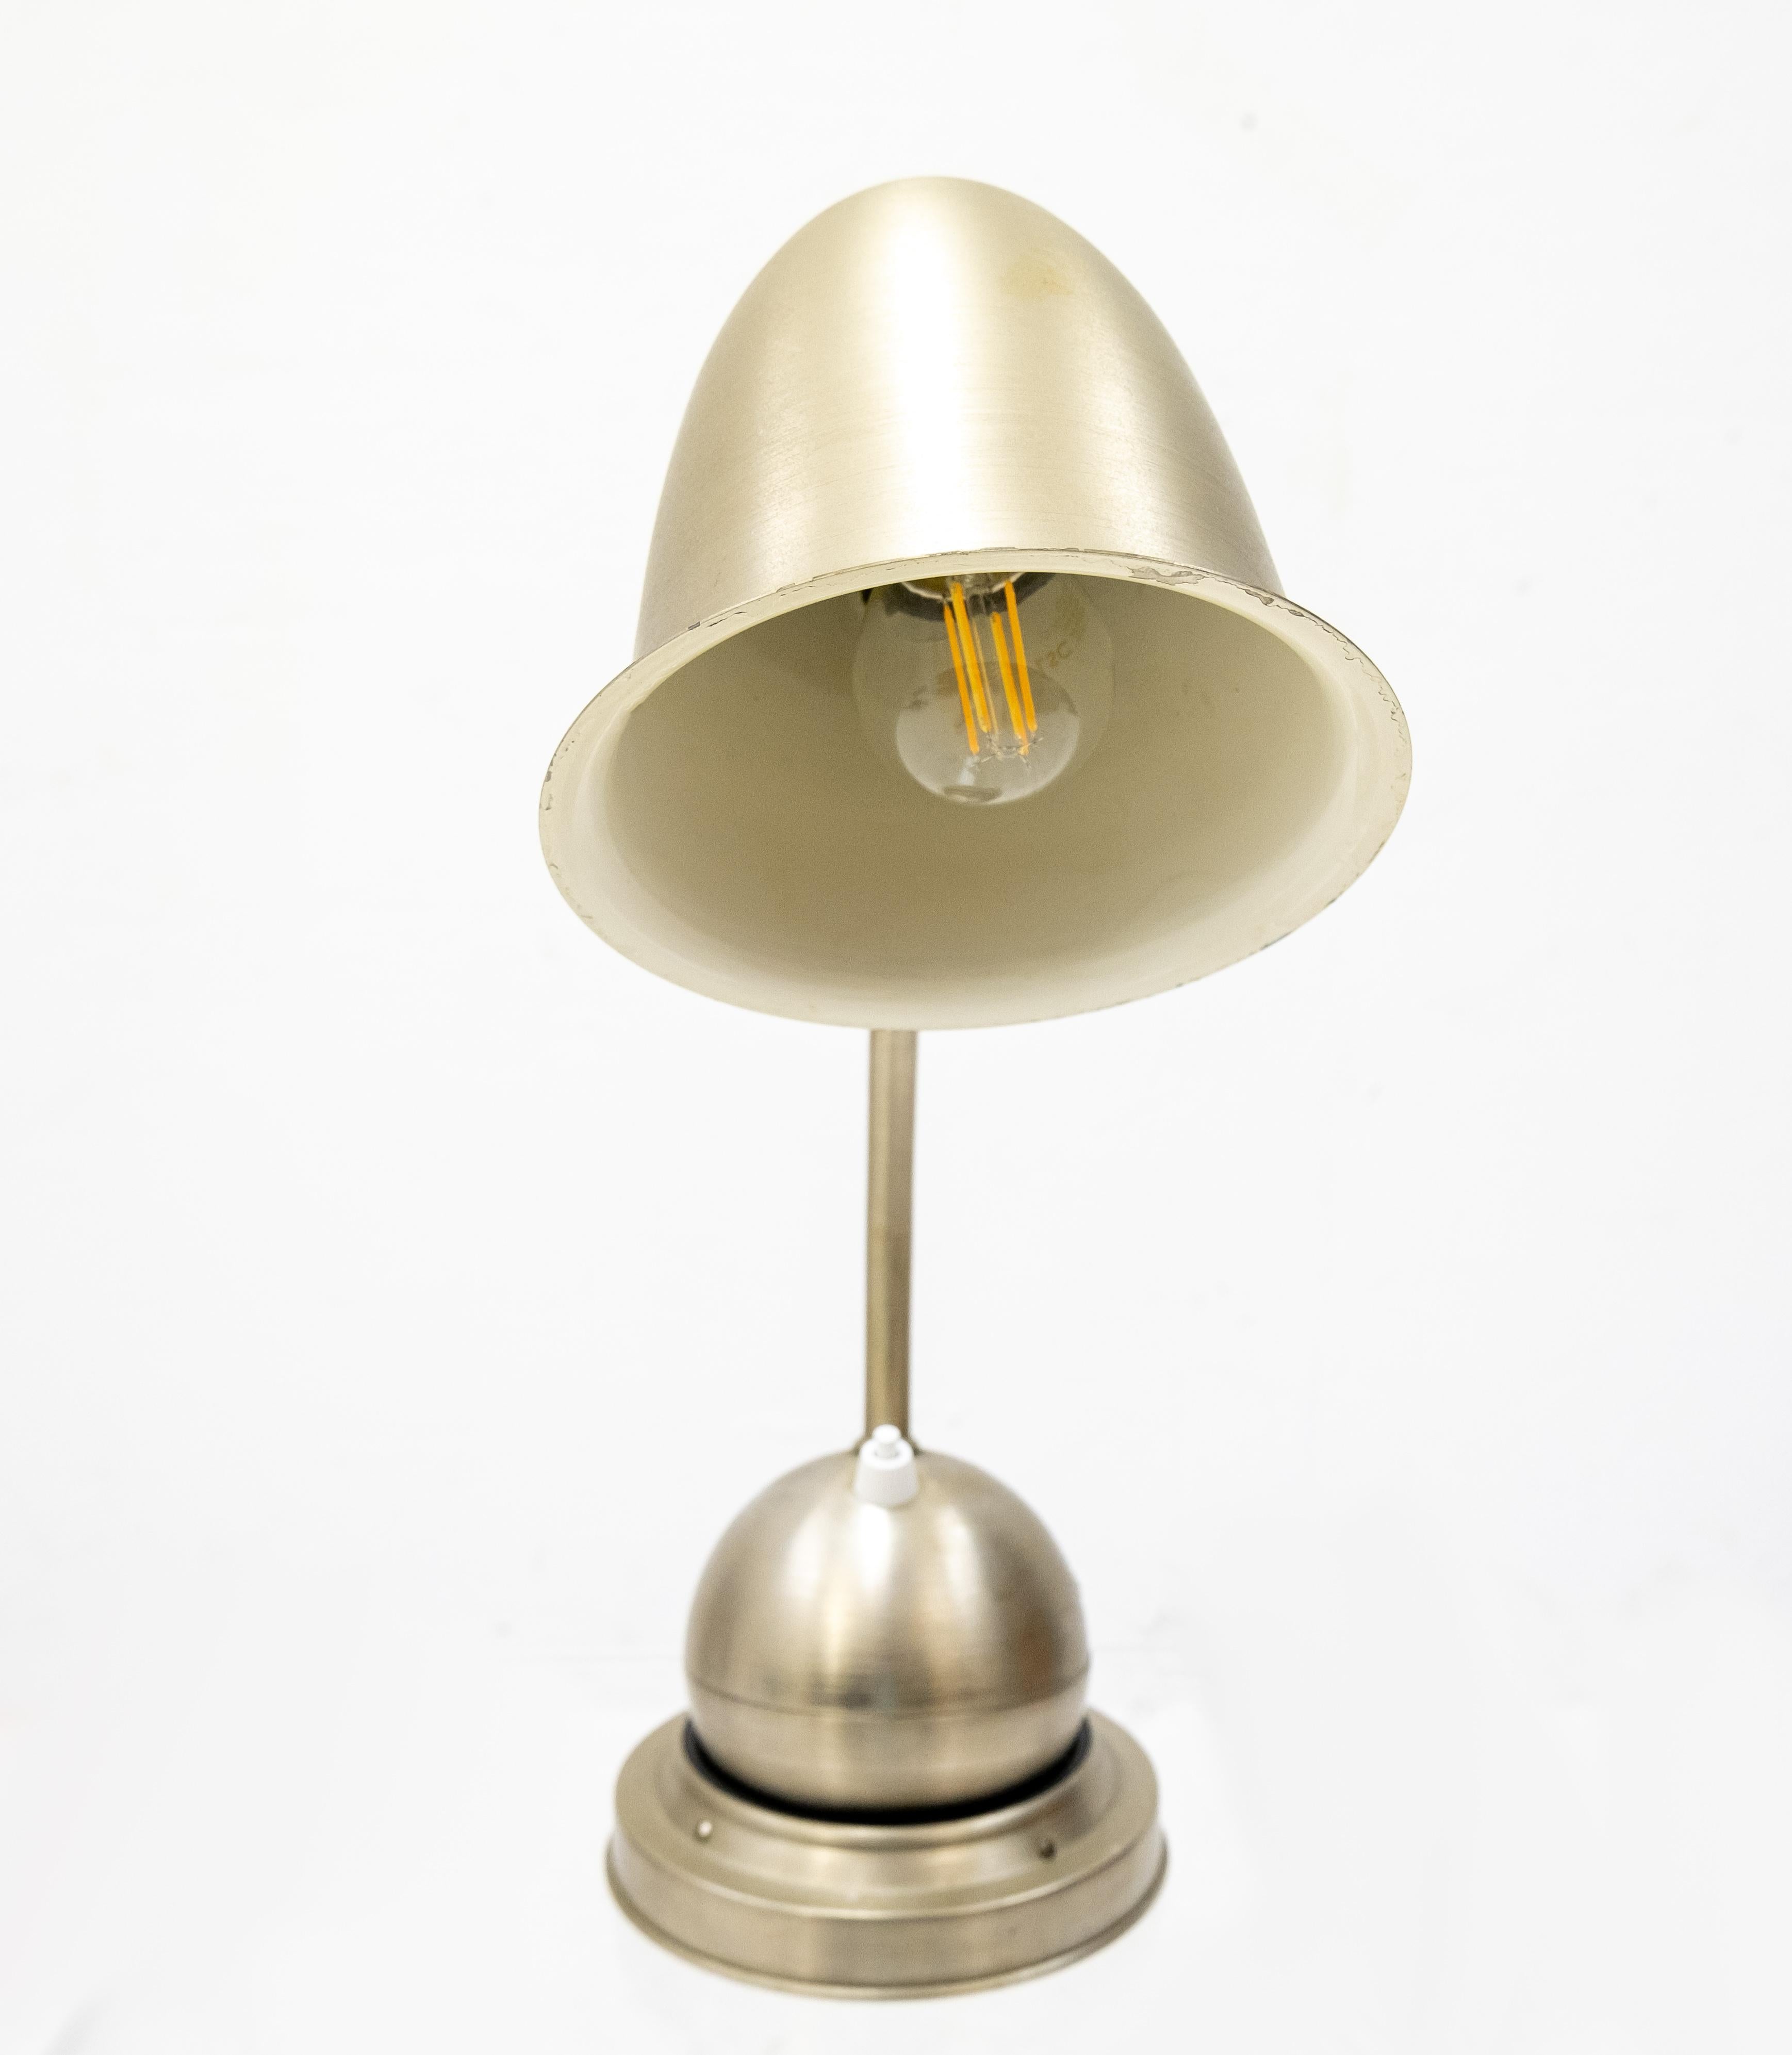 Early 20th Century Gispen the Tumbler Art Deco Table Lamp